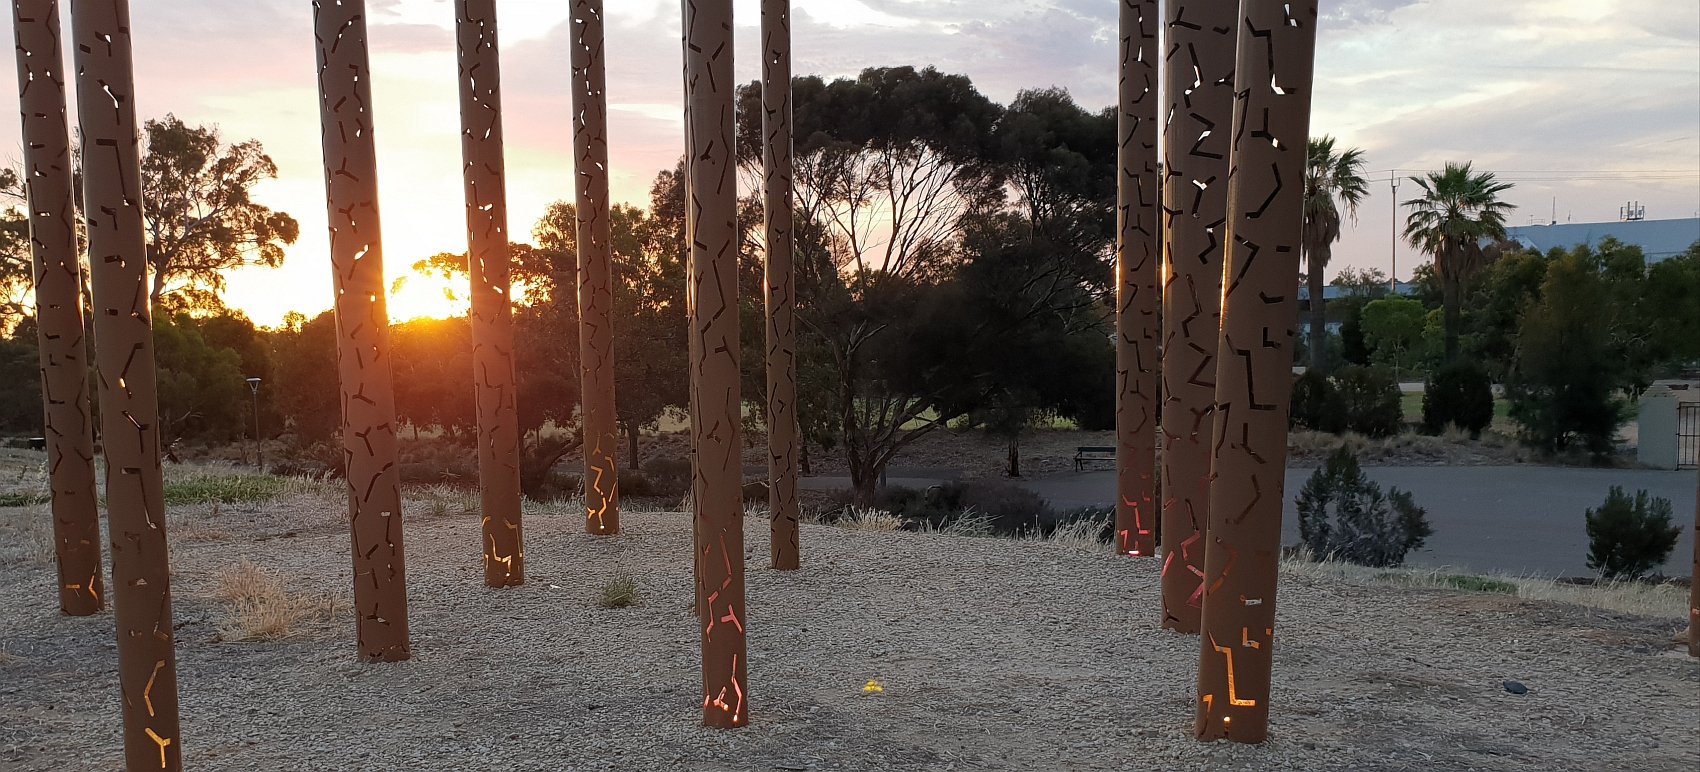 07_Eucalyptus alive at sunset.jpg